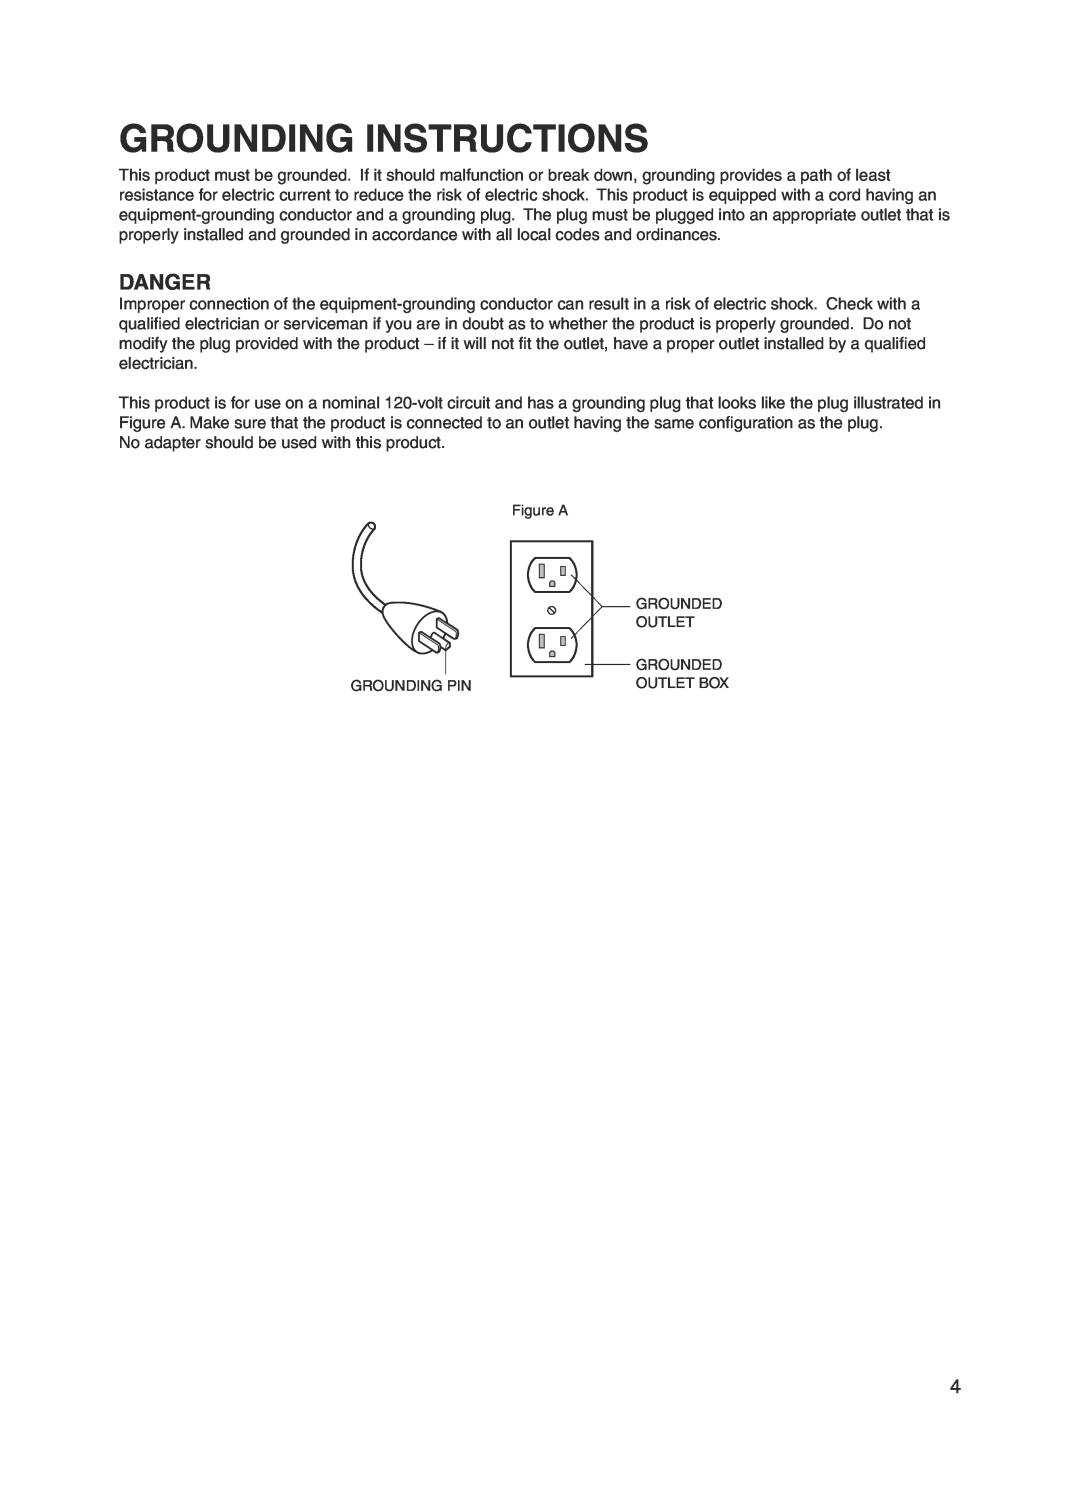 Panasonic EP30004 manual Grounding Instructions, Danger 